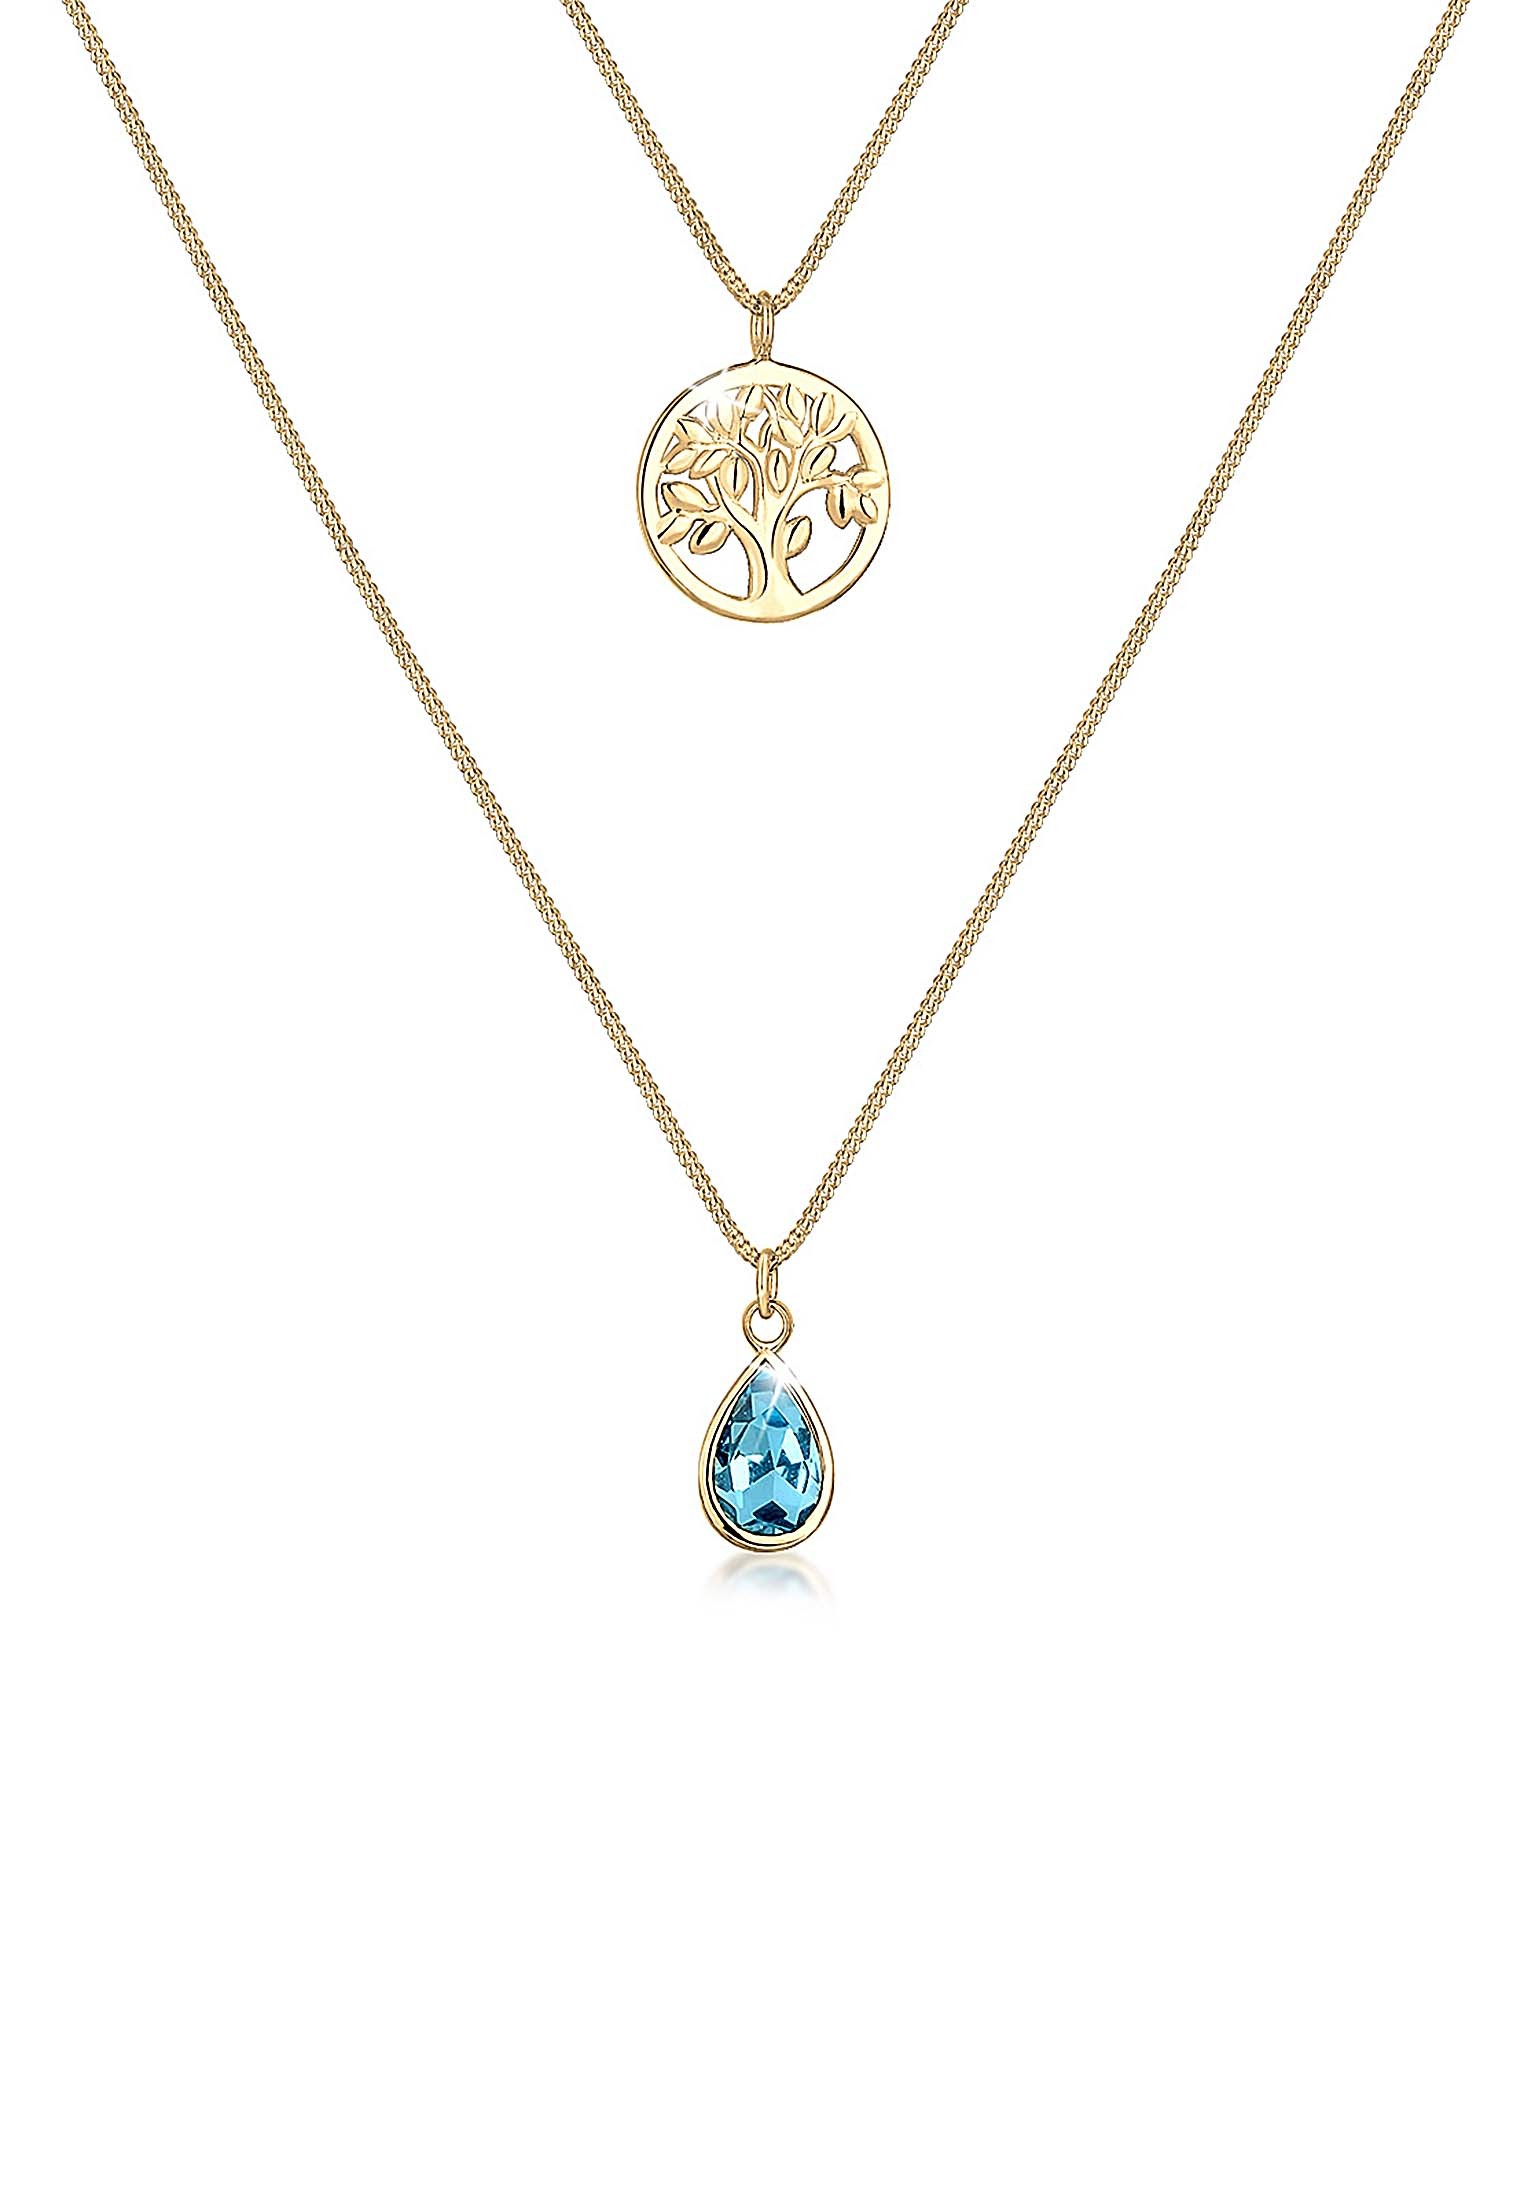 Halskette | Kristall ( Hellblau ) | 925 Sterling Silber vergoldet